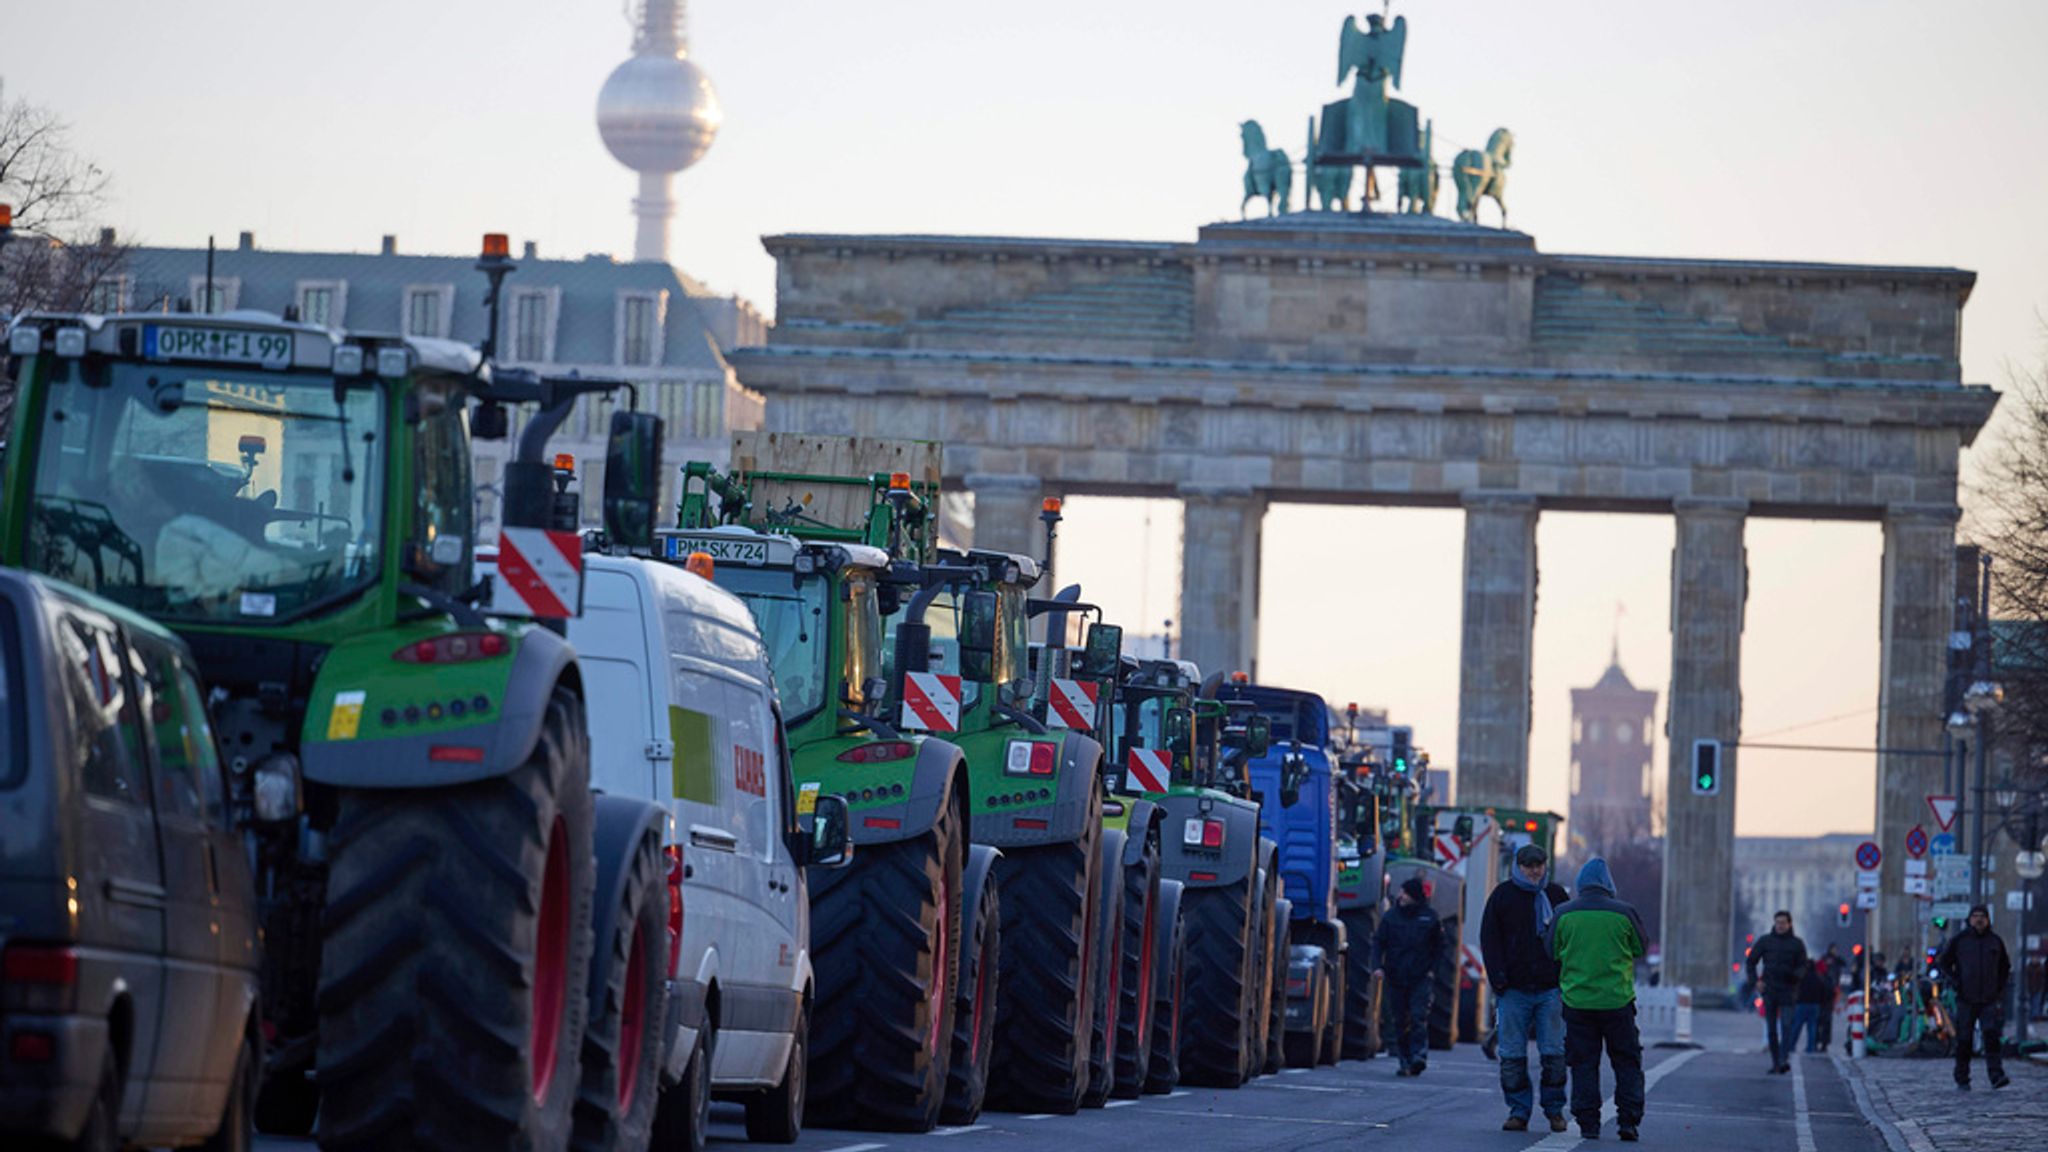 German farmers block roads in nationwide protest over diesel tax plans